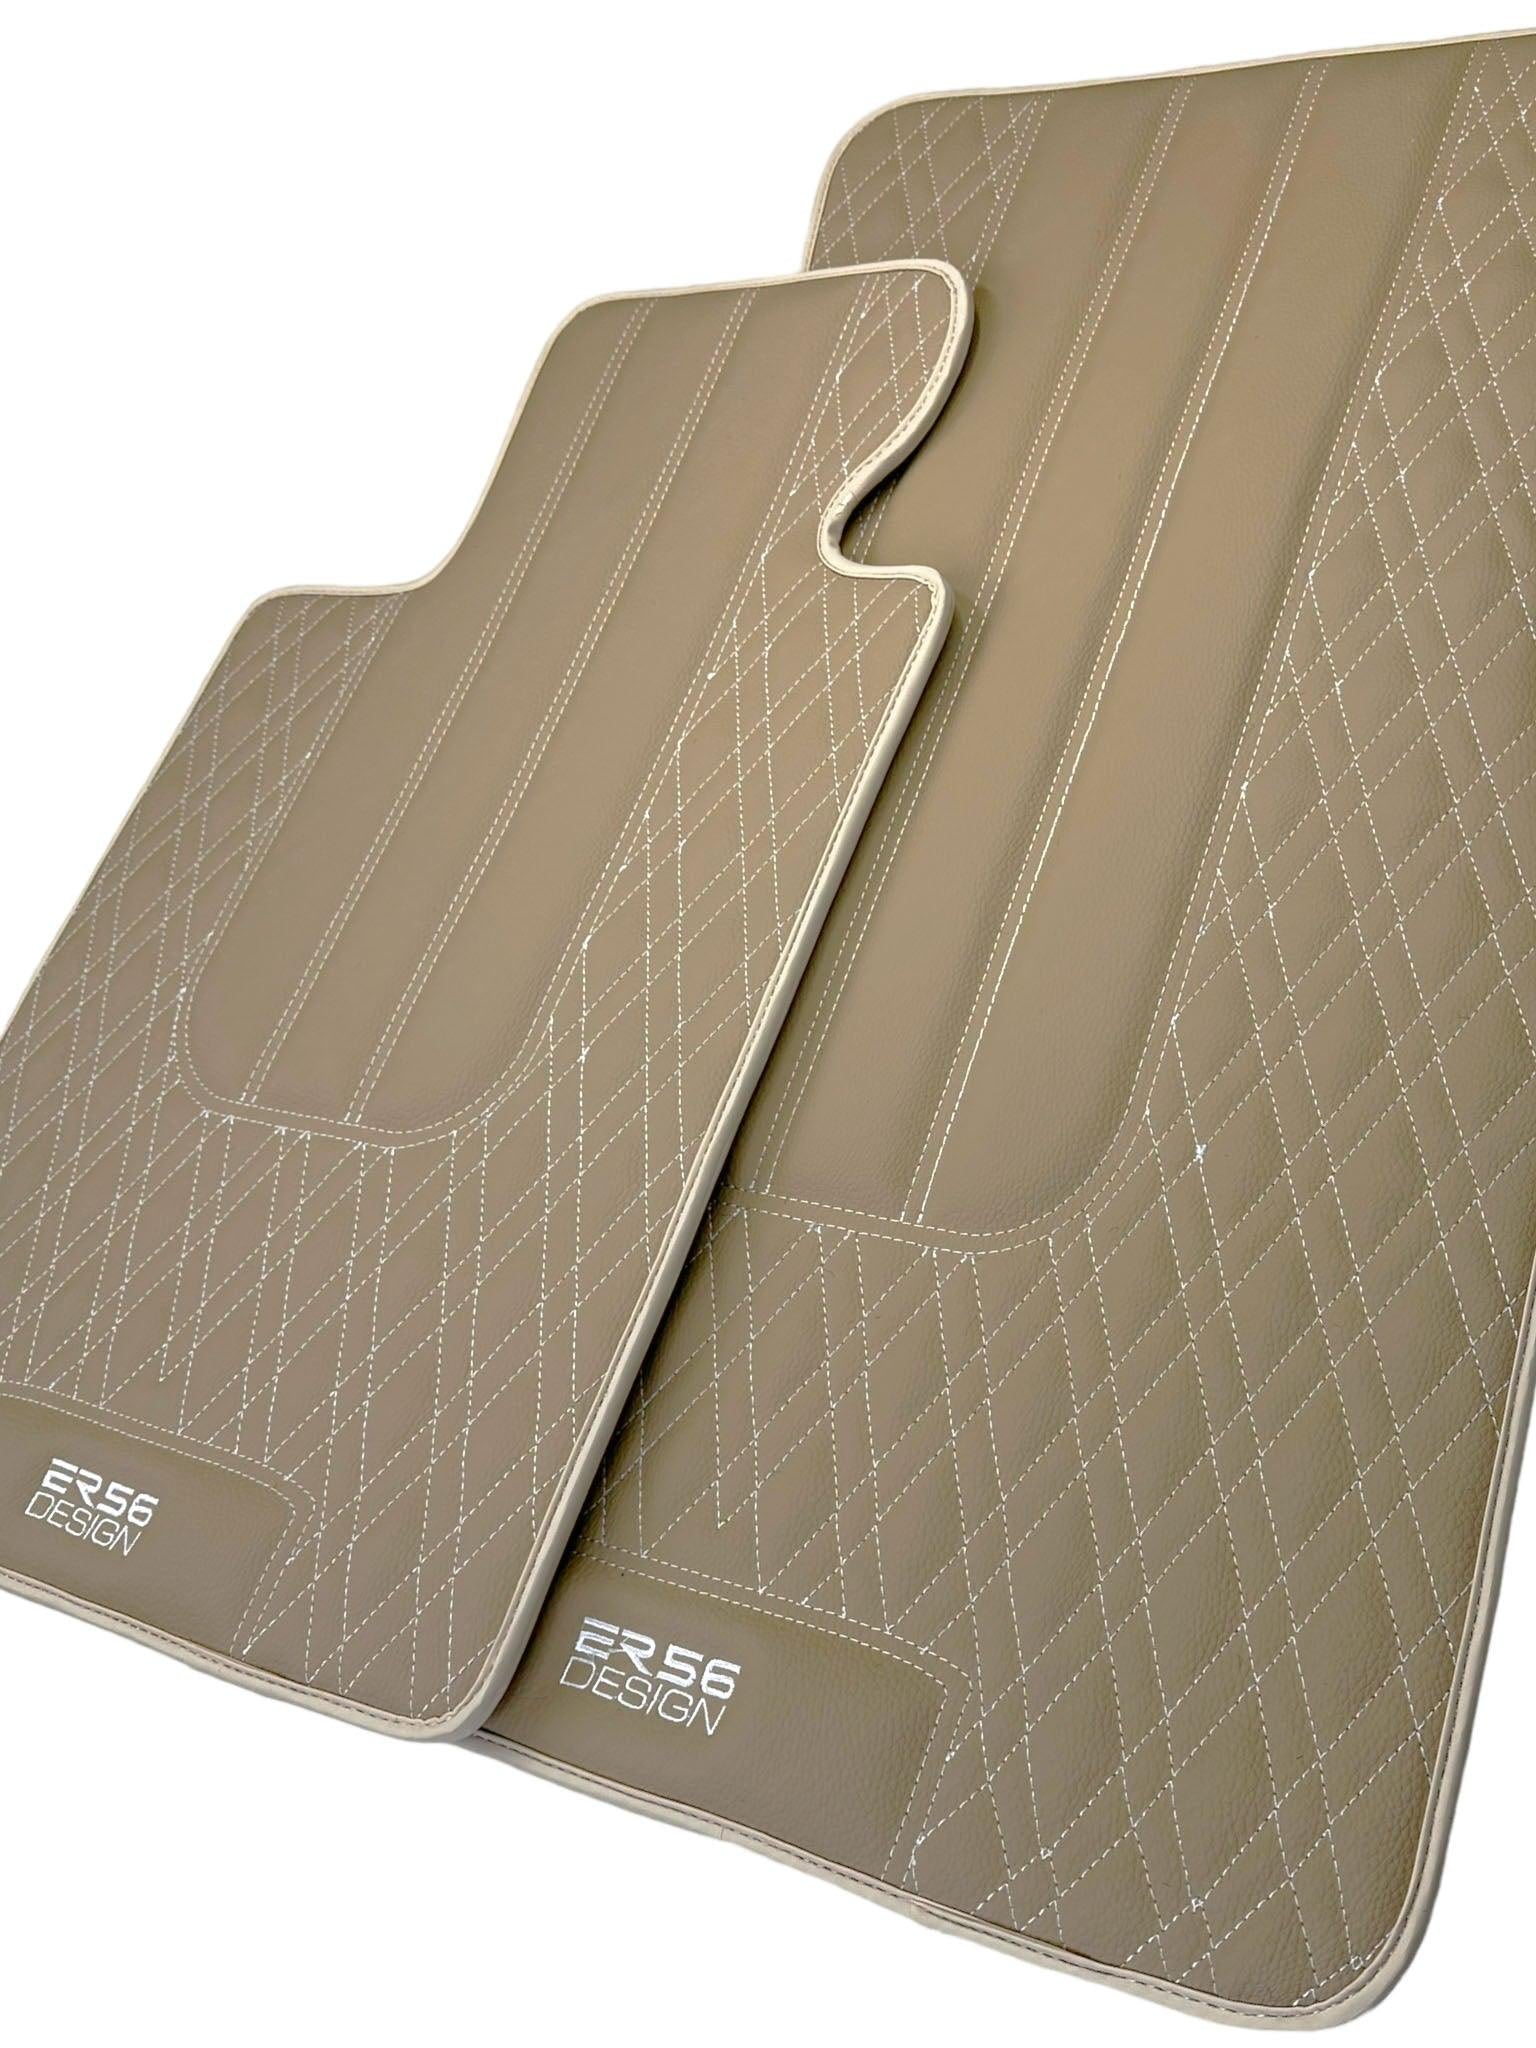 Beige Leather Floor Floor Mats For BMW 7 Series G12 | Fighter Jet Edition AutoWin Brand |Sky Blue Trim